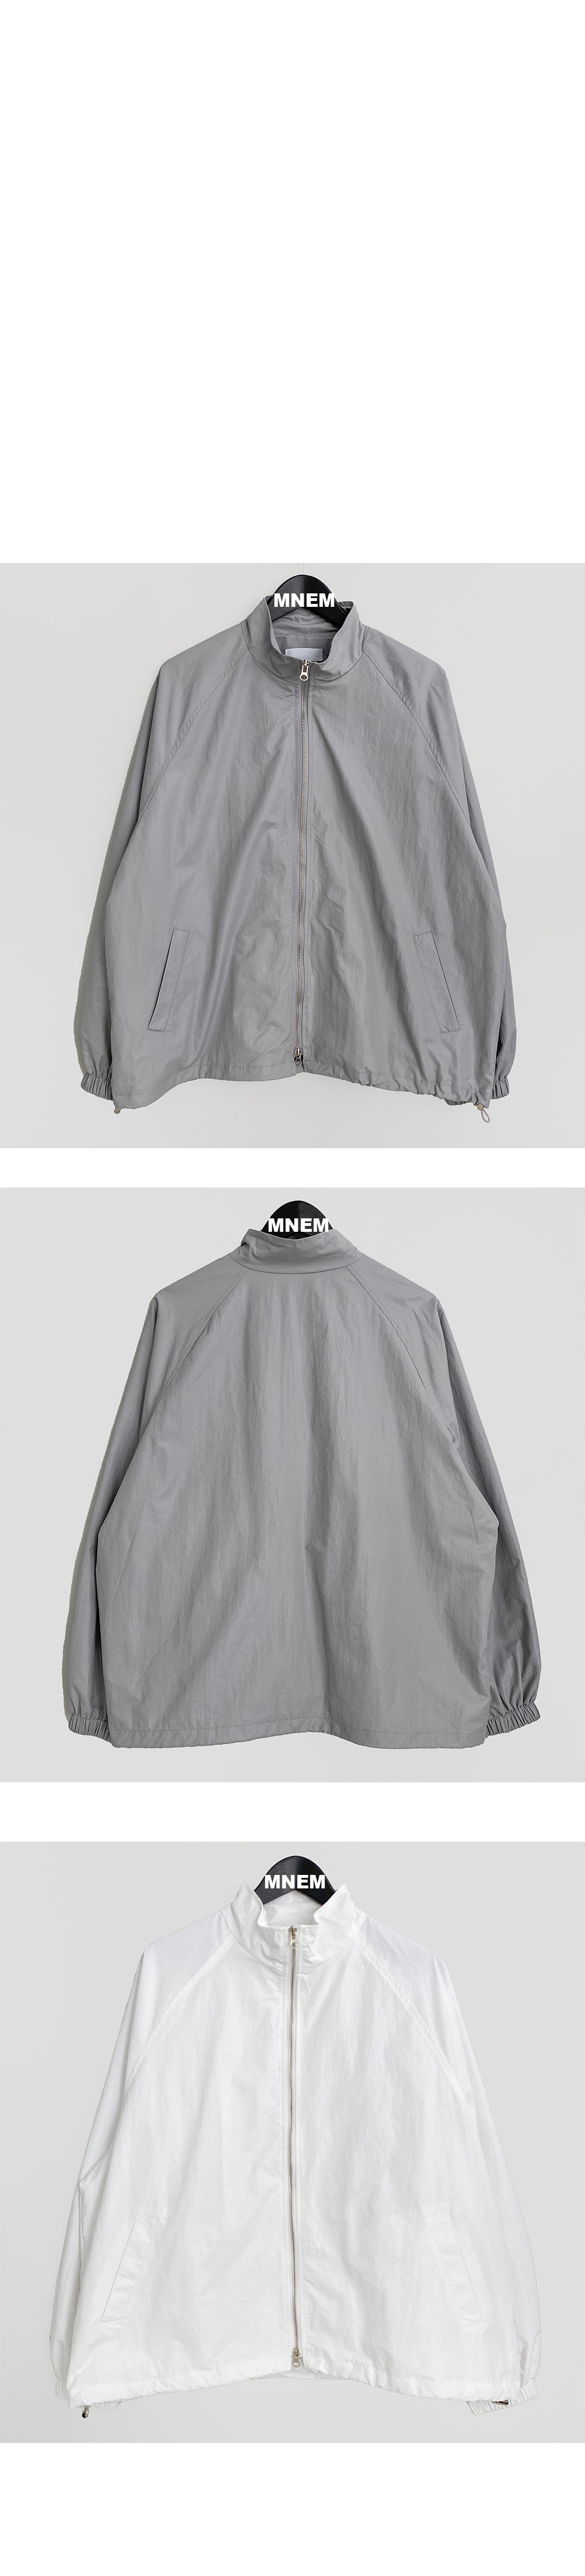 jacket grey color image-S2L1